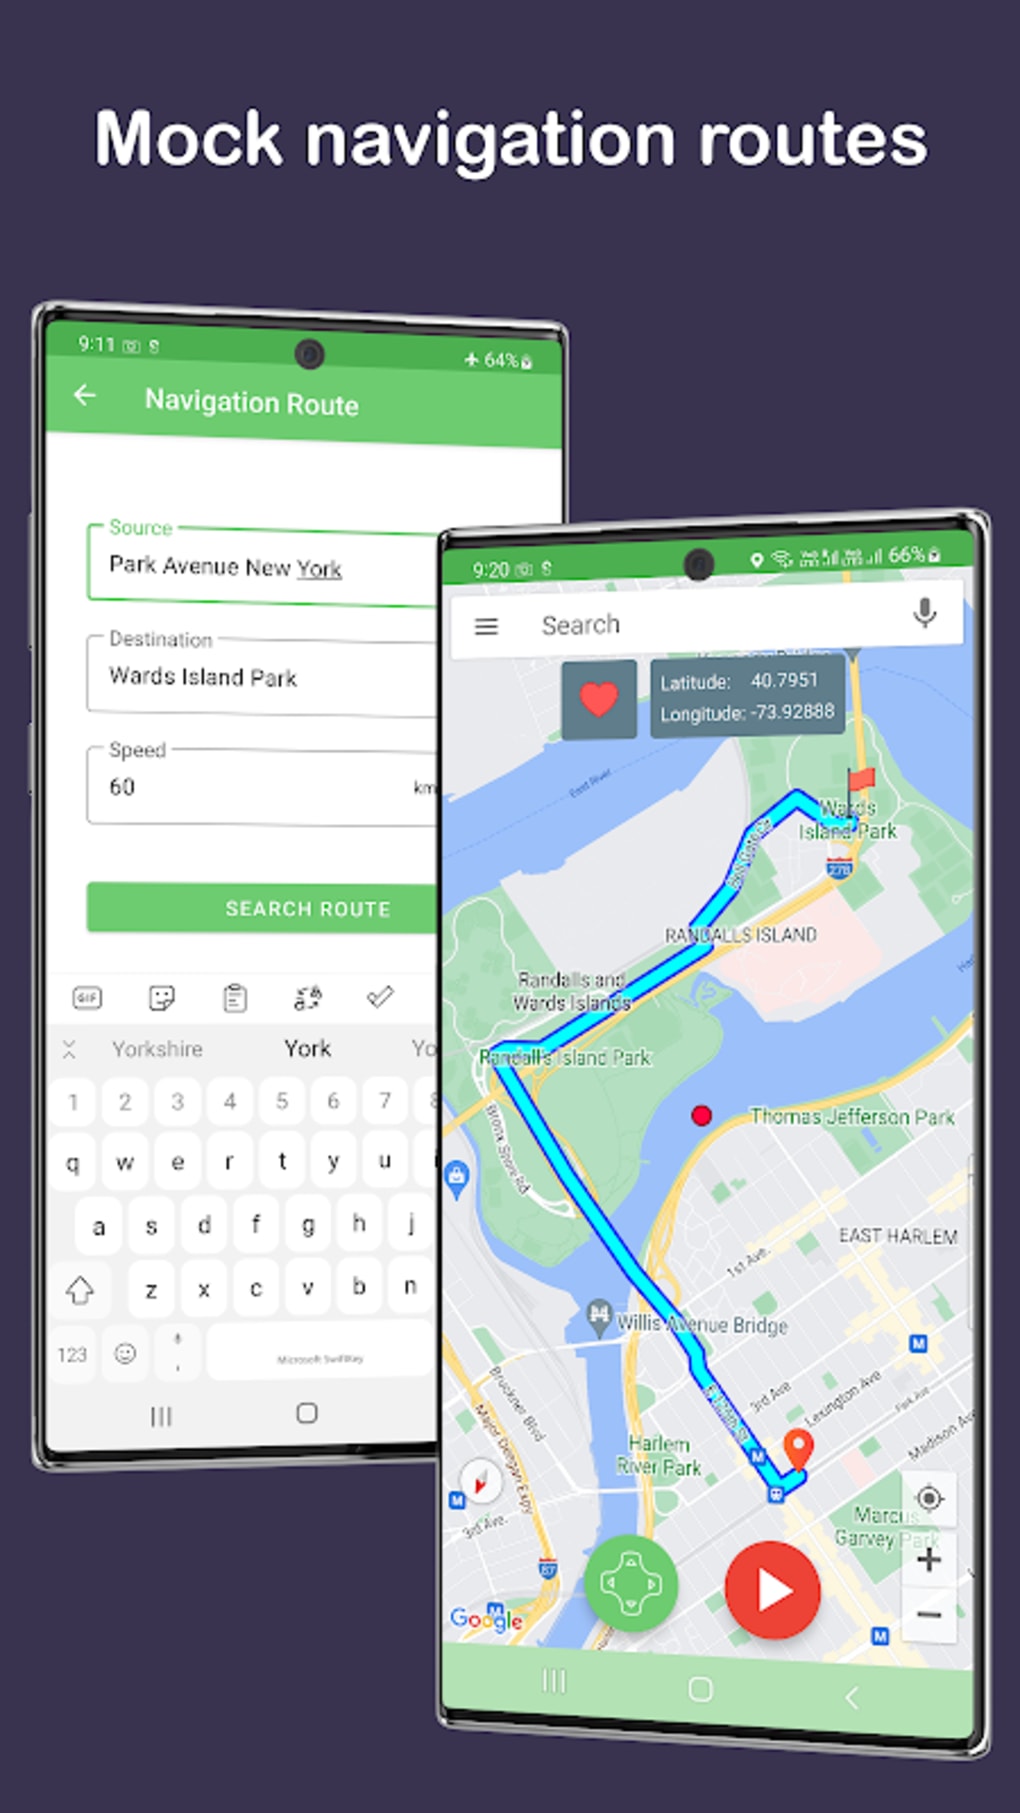 Fake GPS Location-GPS JoyStick - Apps on Google Play